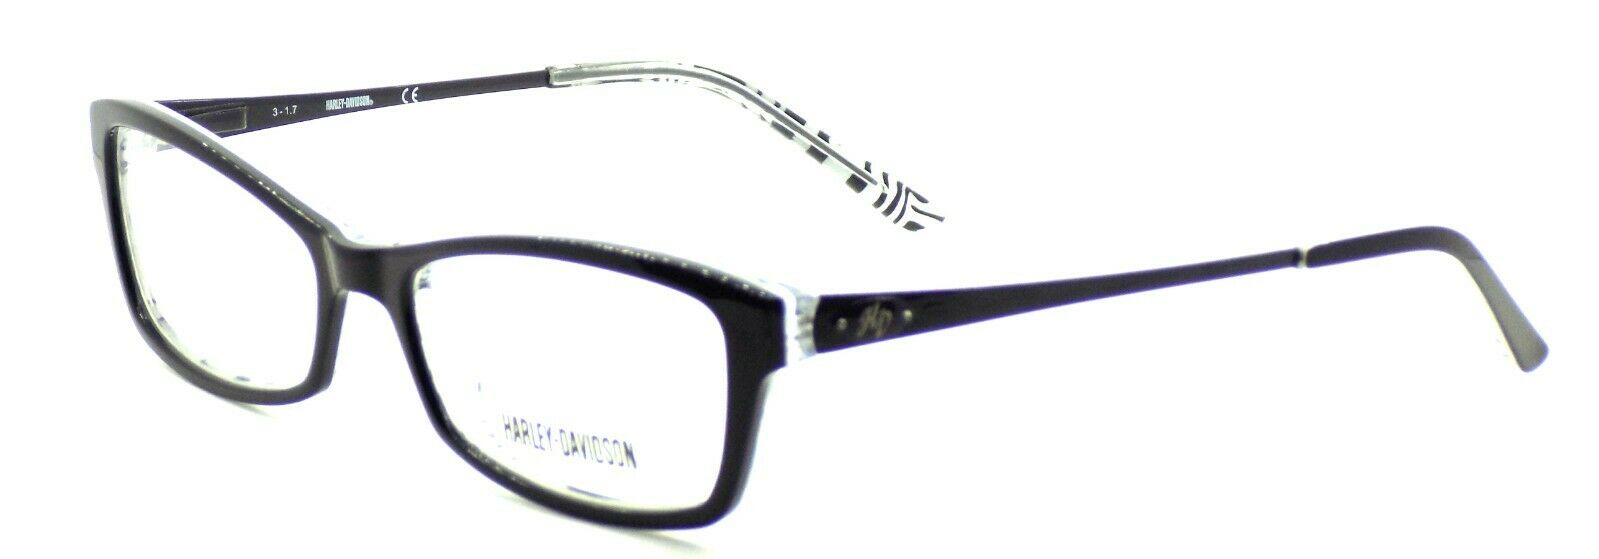 1-Harley Davidson HD509 BLK Women's Eyeglasses Frames 52-16-135 Black-715583605251-IKSpecs